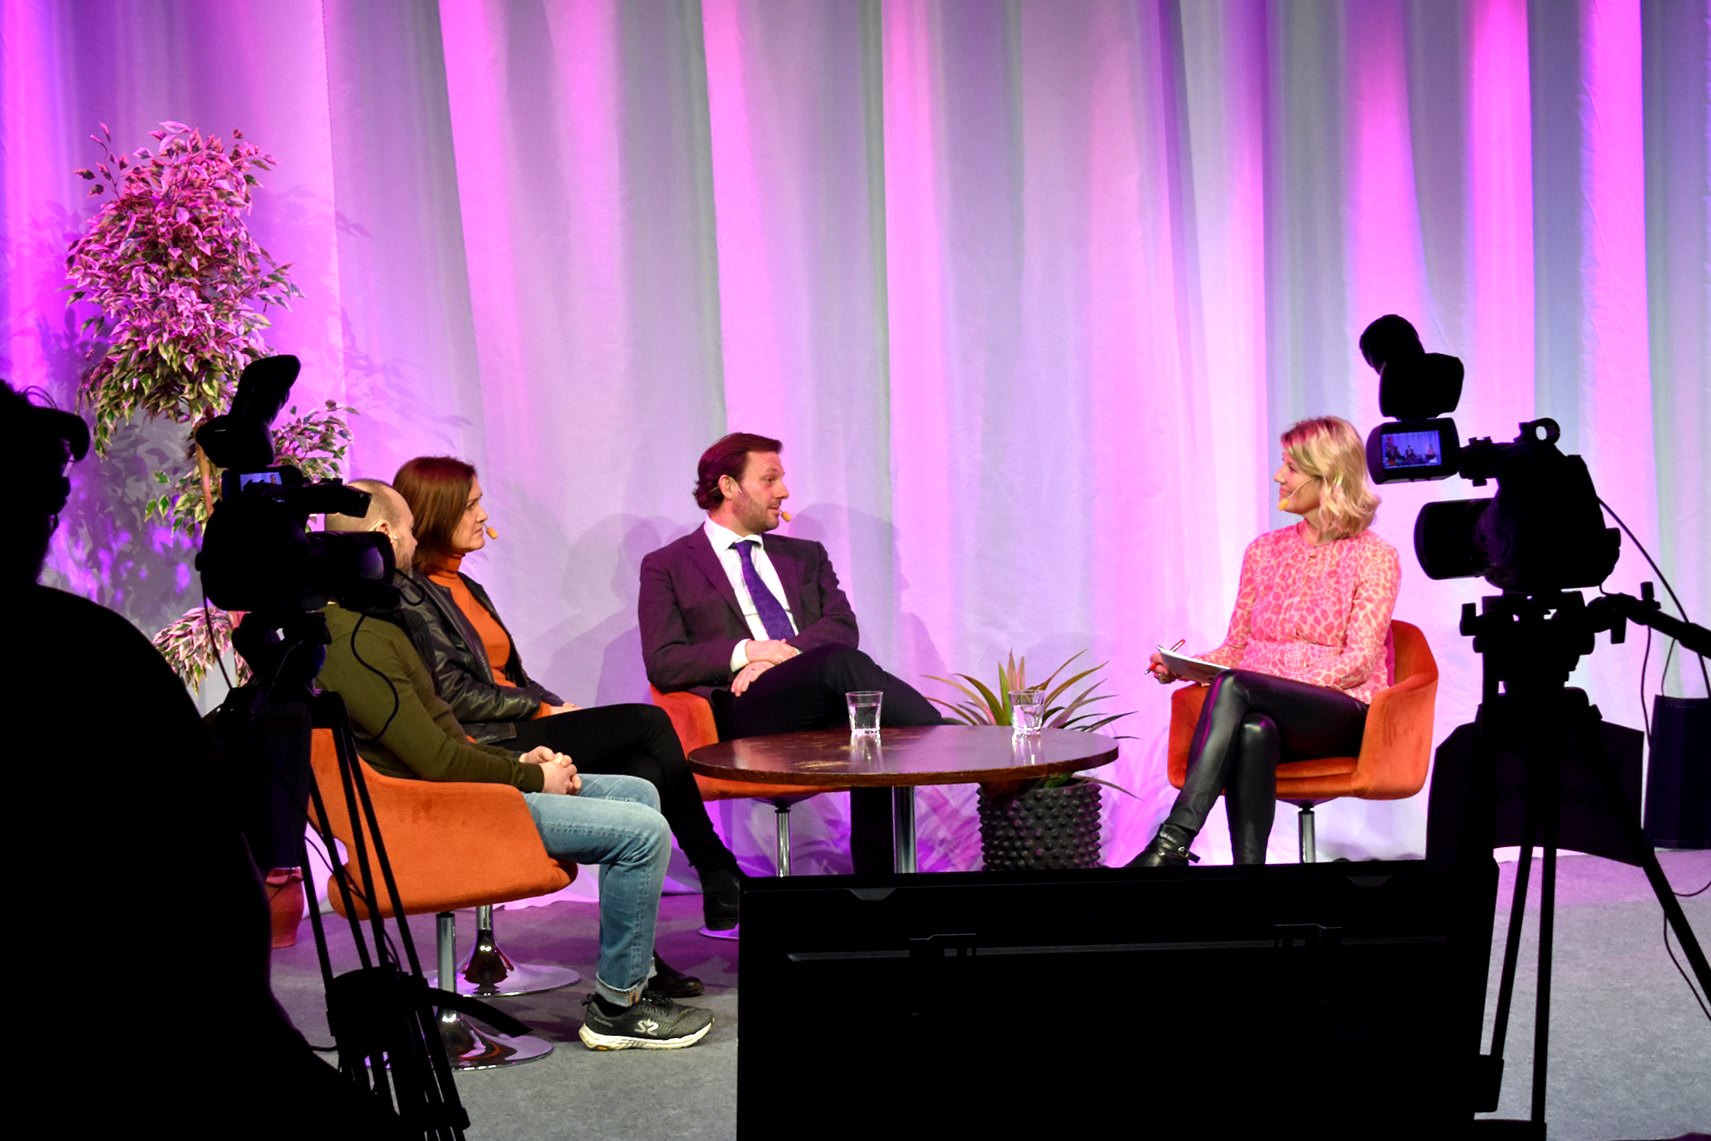 Konferencier Pernilla warberg i filmstudio samtalandes med en panel